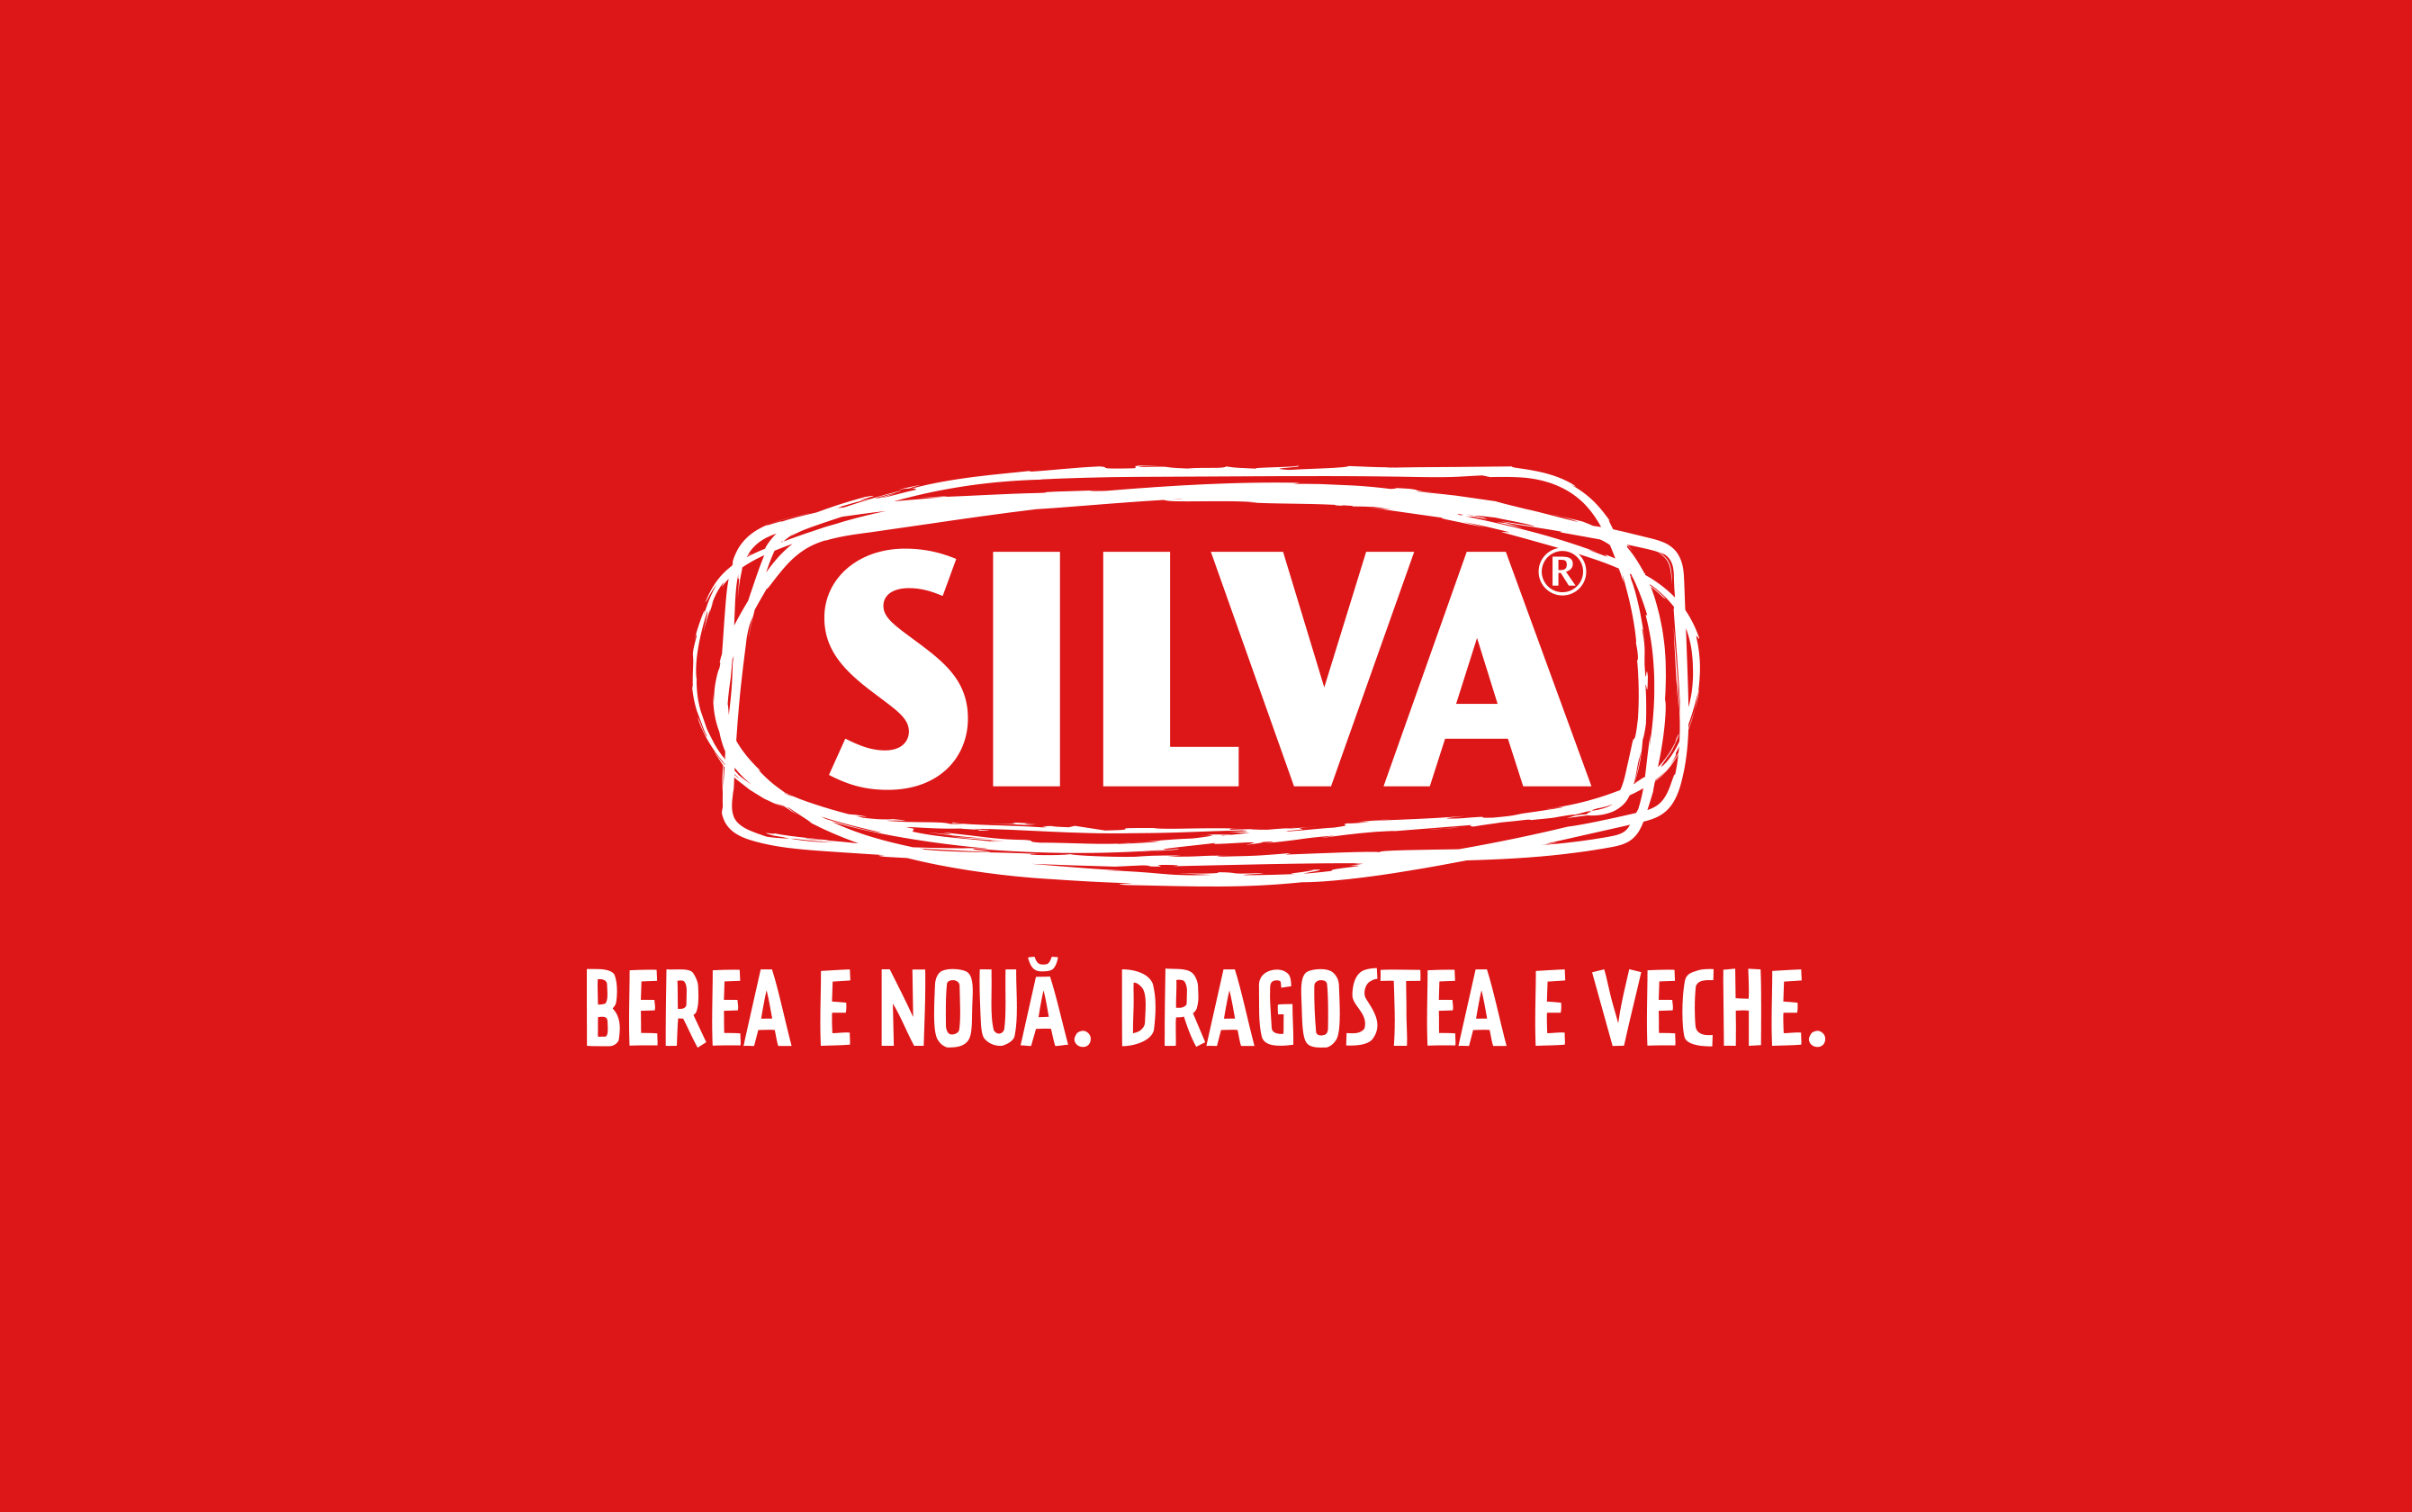 Silva Brand Logo